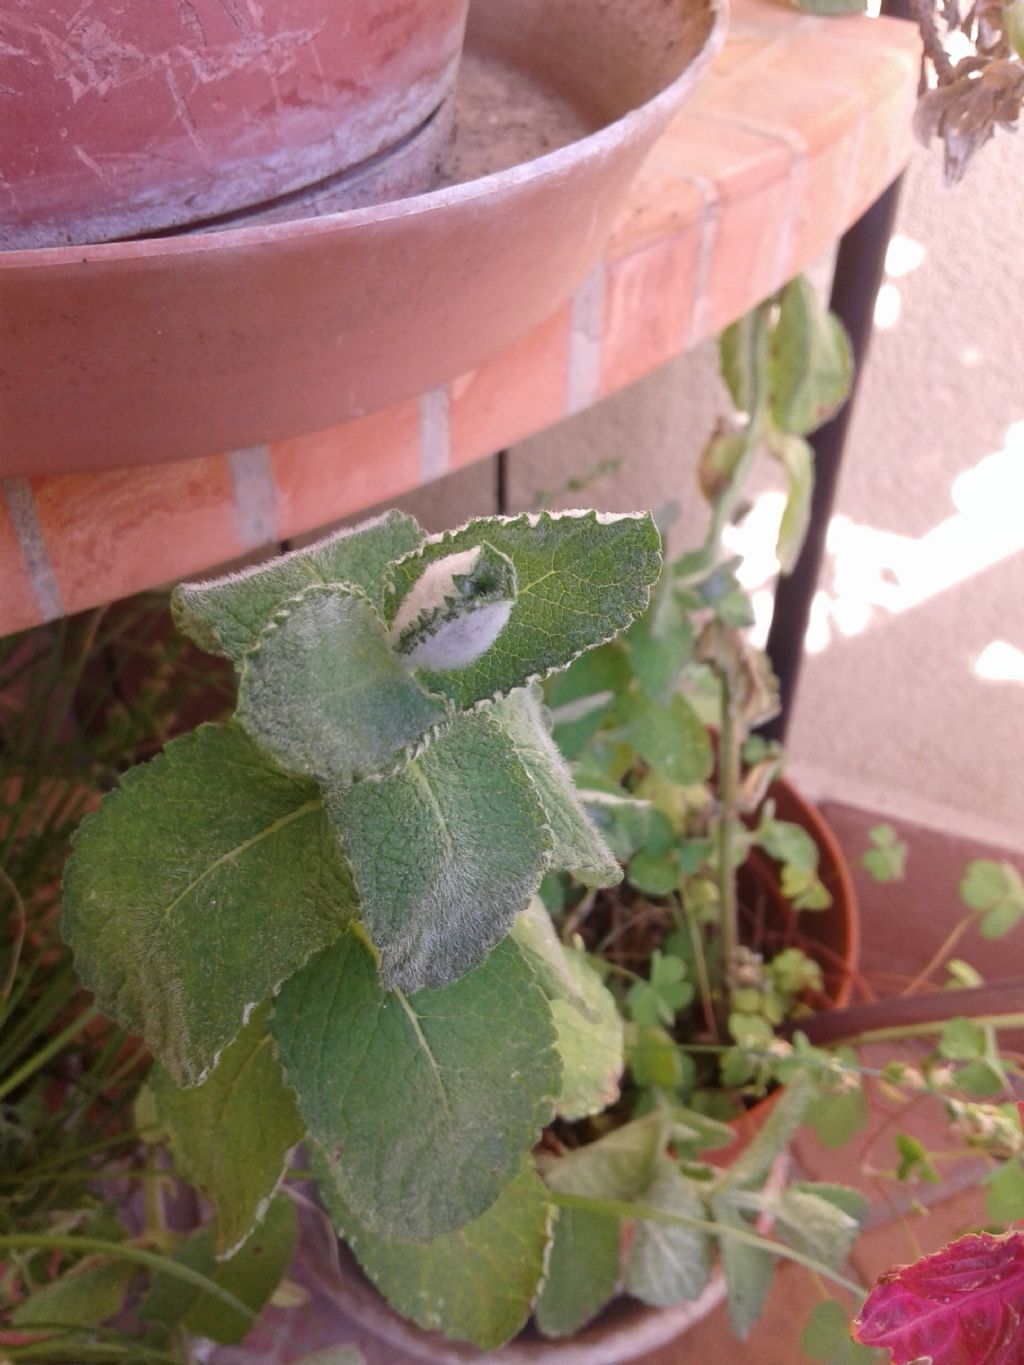 Mentha suaveolens (Lamiaceae)